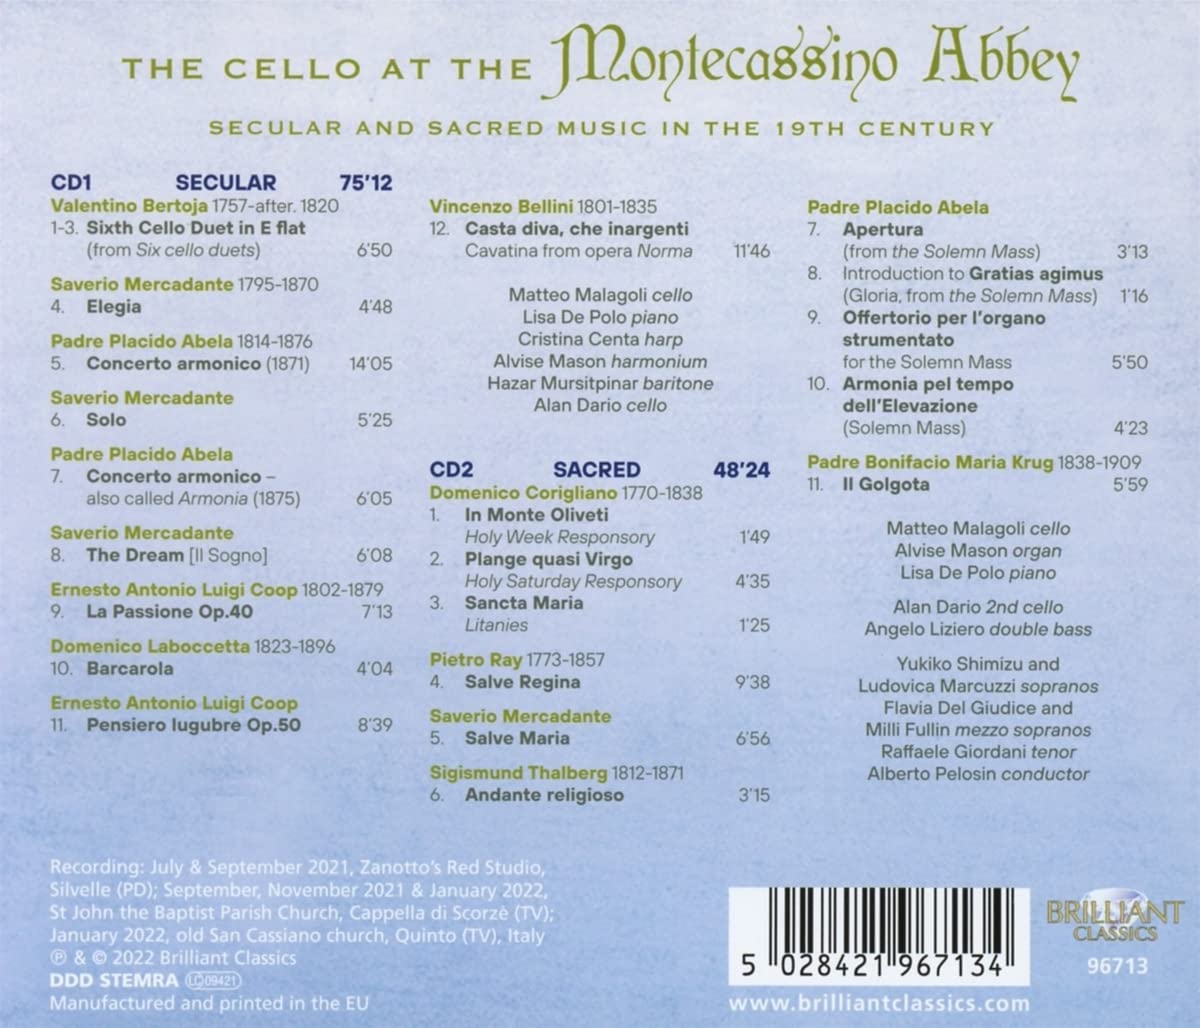 Matteo Malagoli 19세기의 진귀한 첼로 작품 모음집 - ‘몬테카시노 수도원의 첼로’ (The Cello at the Montecassino Abbey)